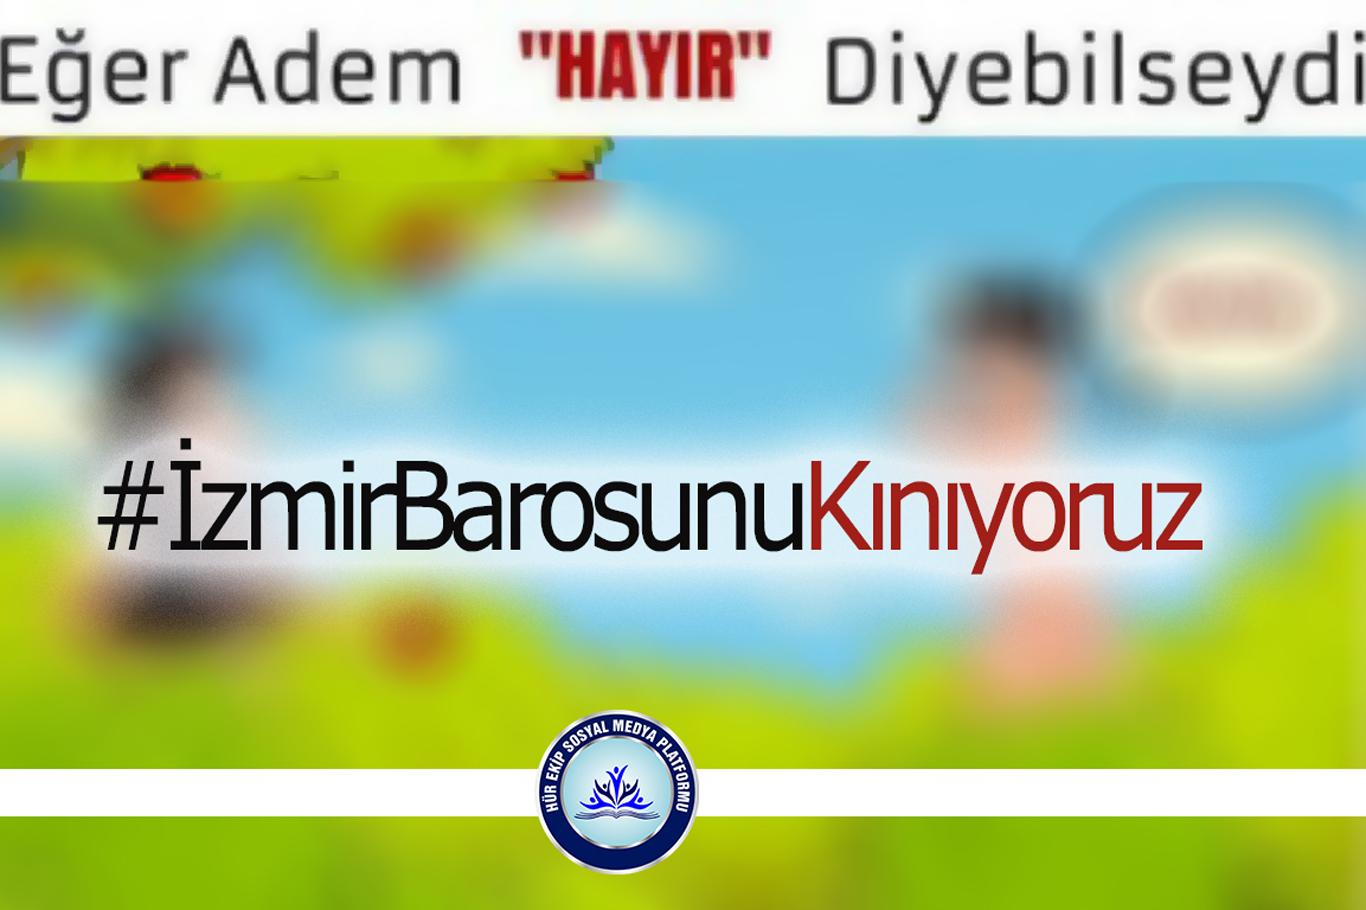 İzmir Barosunun skandal videosuna sosyal medyadan tepki